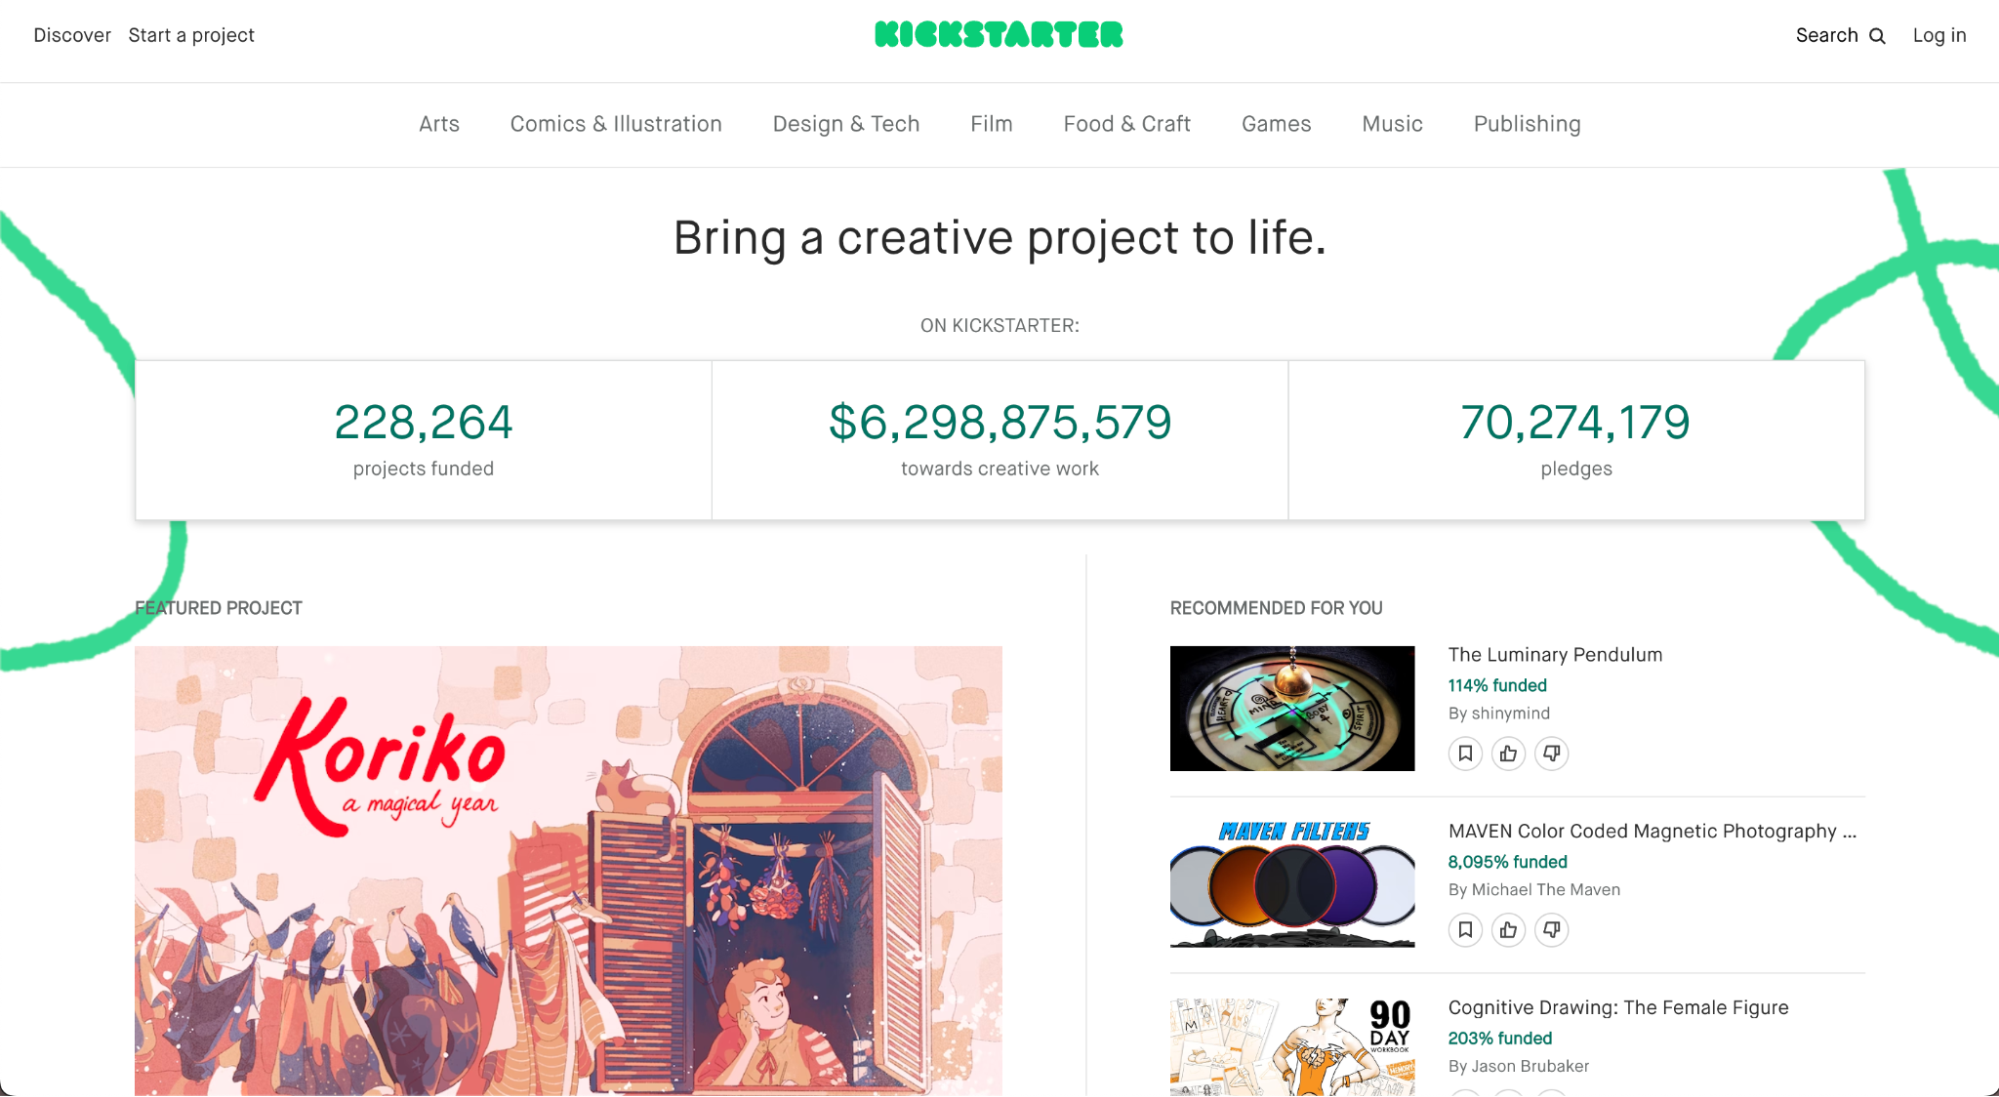 KeepsakeMom Launches Kickstarter Campaign to Help Fund